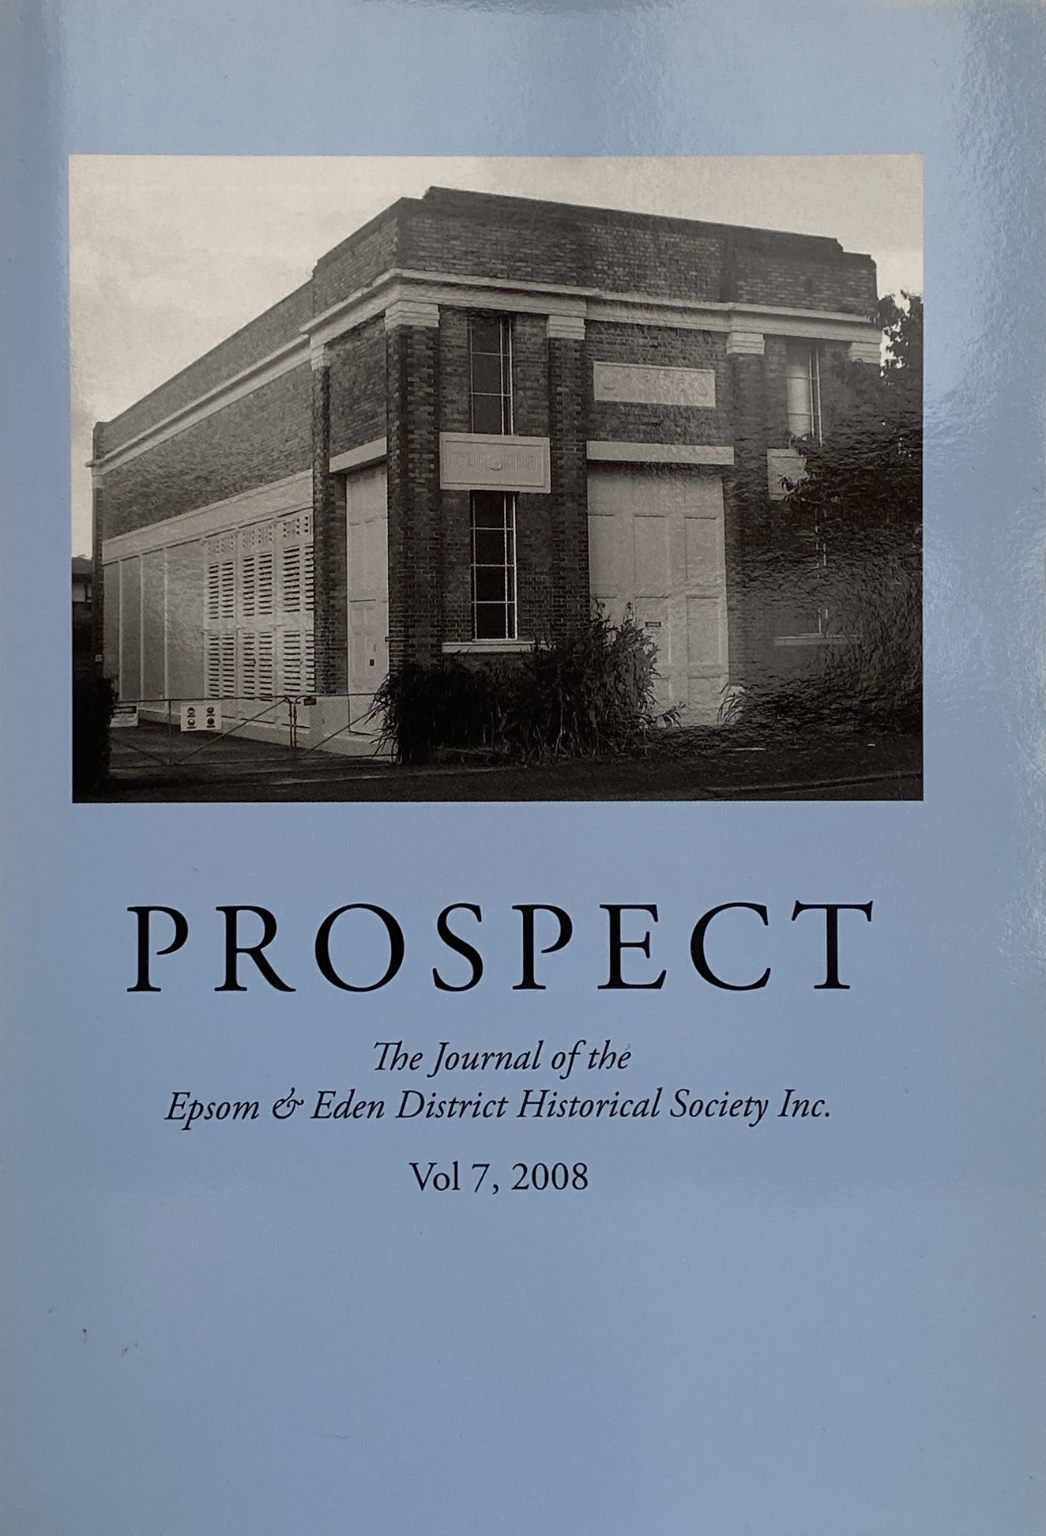 PROSPECT: Journal of the Epsom & Eden District Historical Society - Vol 7, 2008